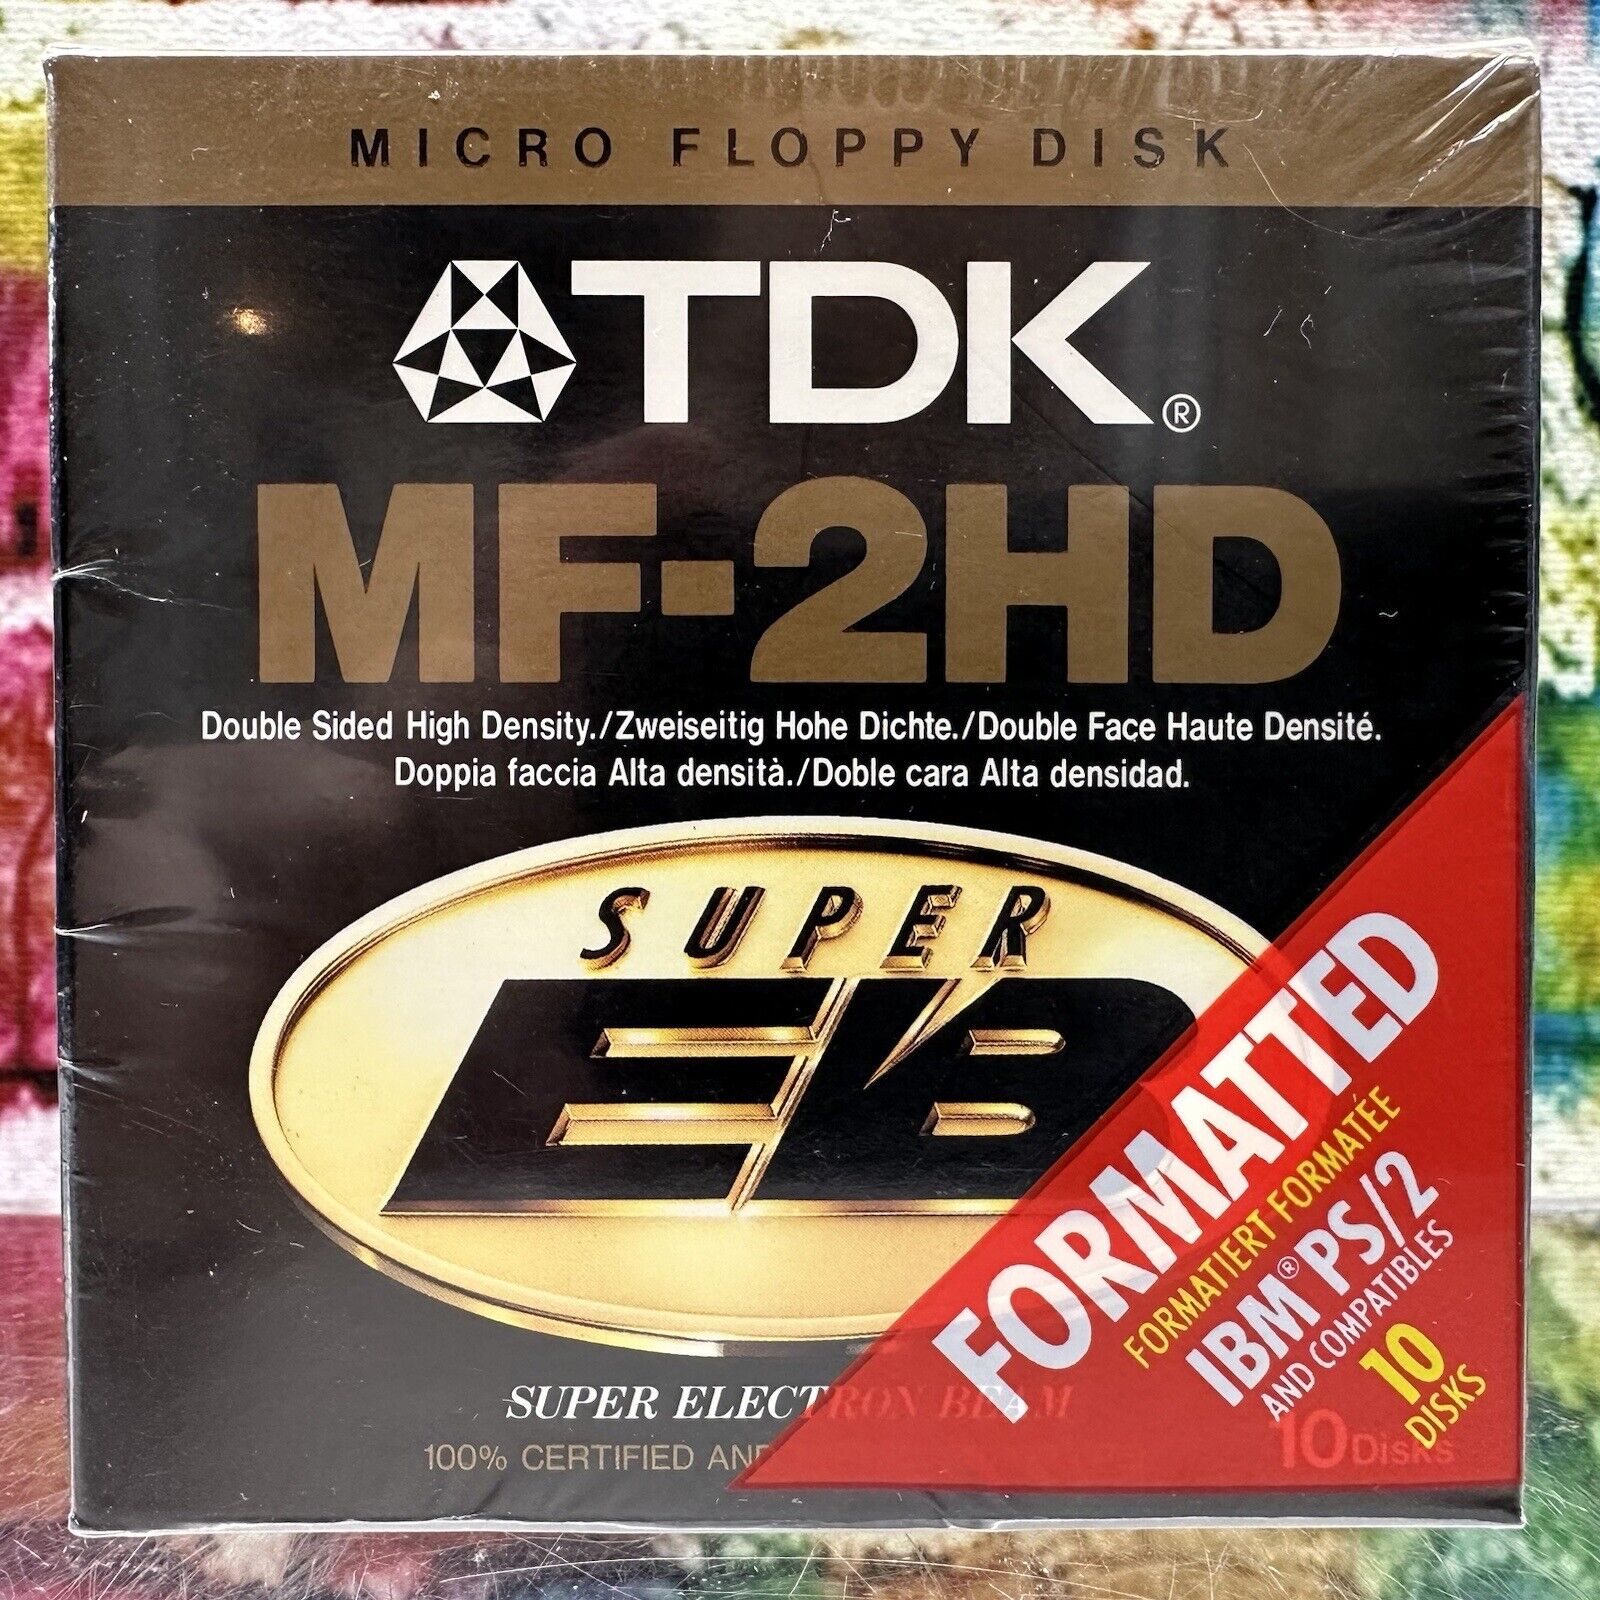 TDK MF-2HD Formatted 3.5